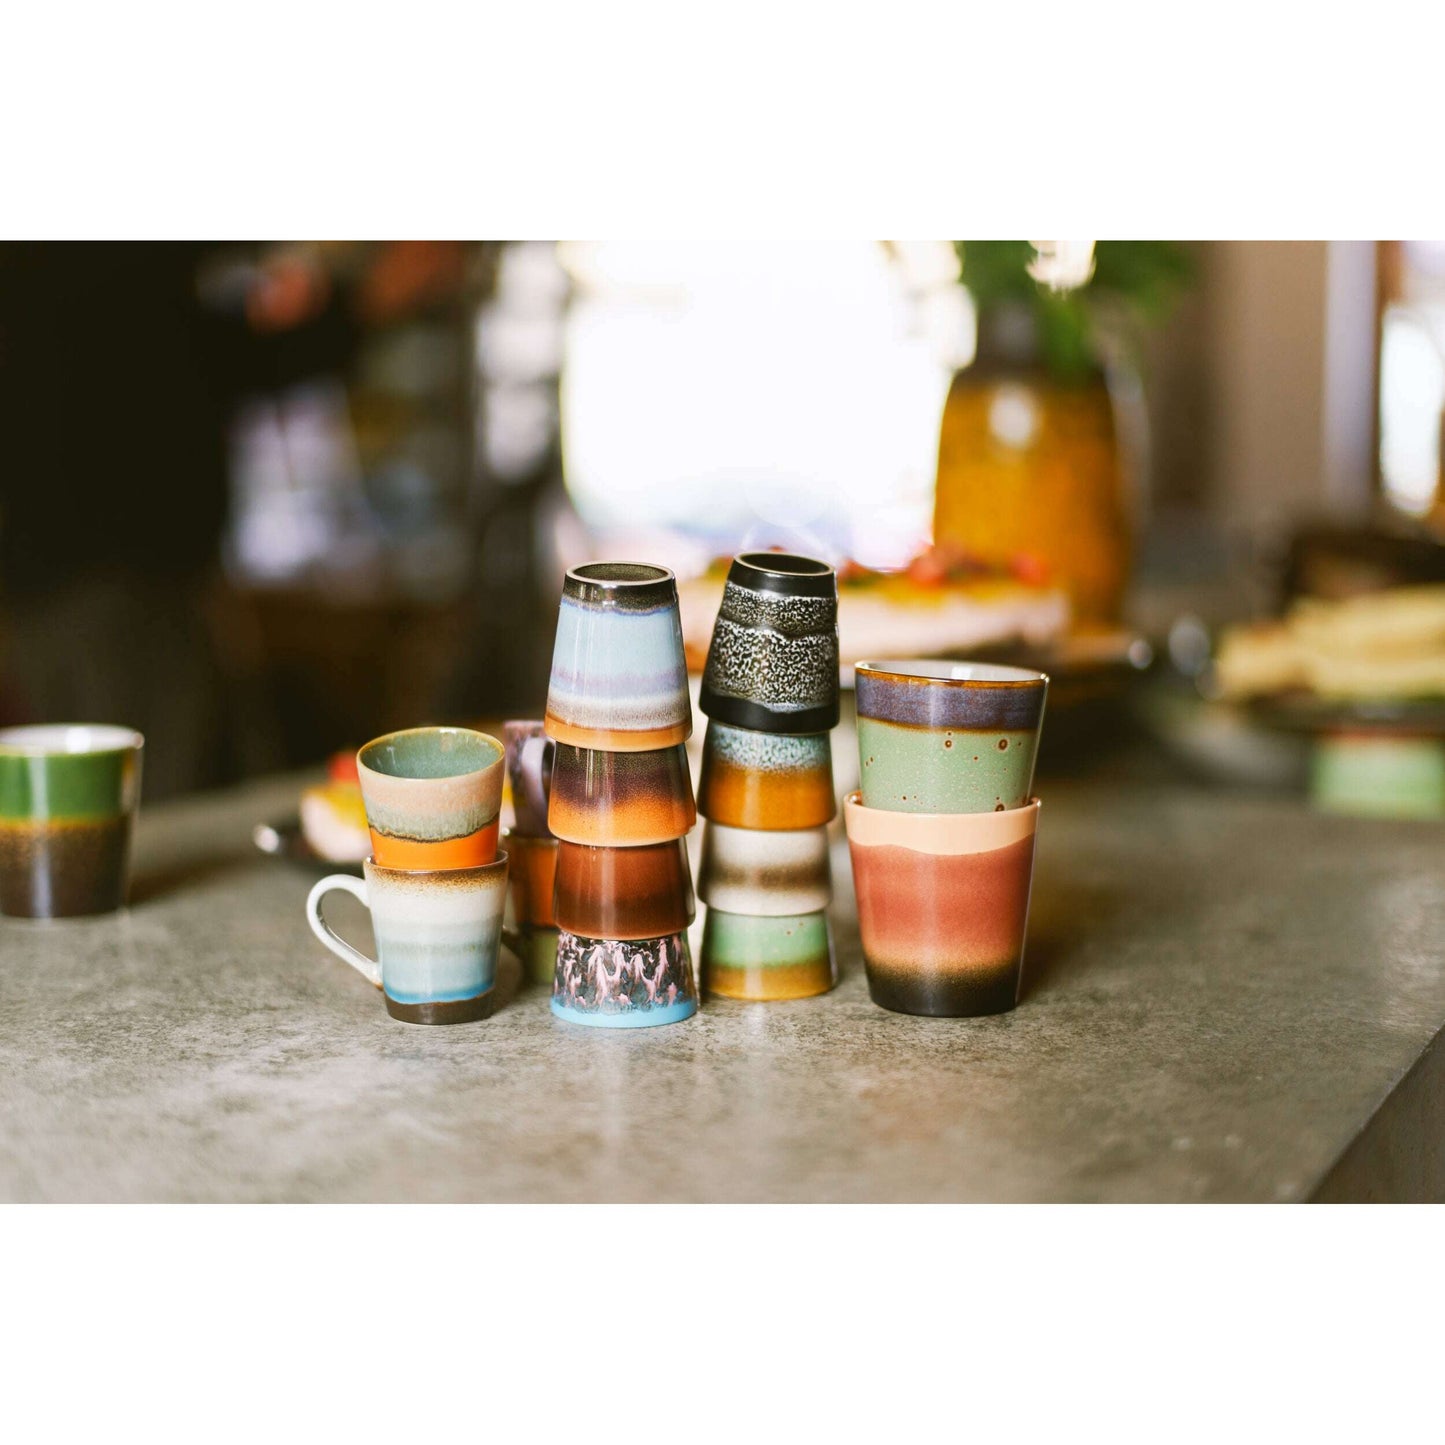 HKliving 70s ceramics: coffee mug rise